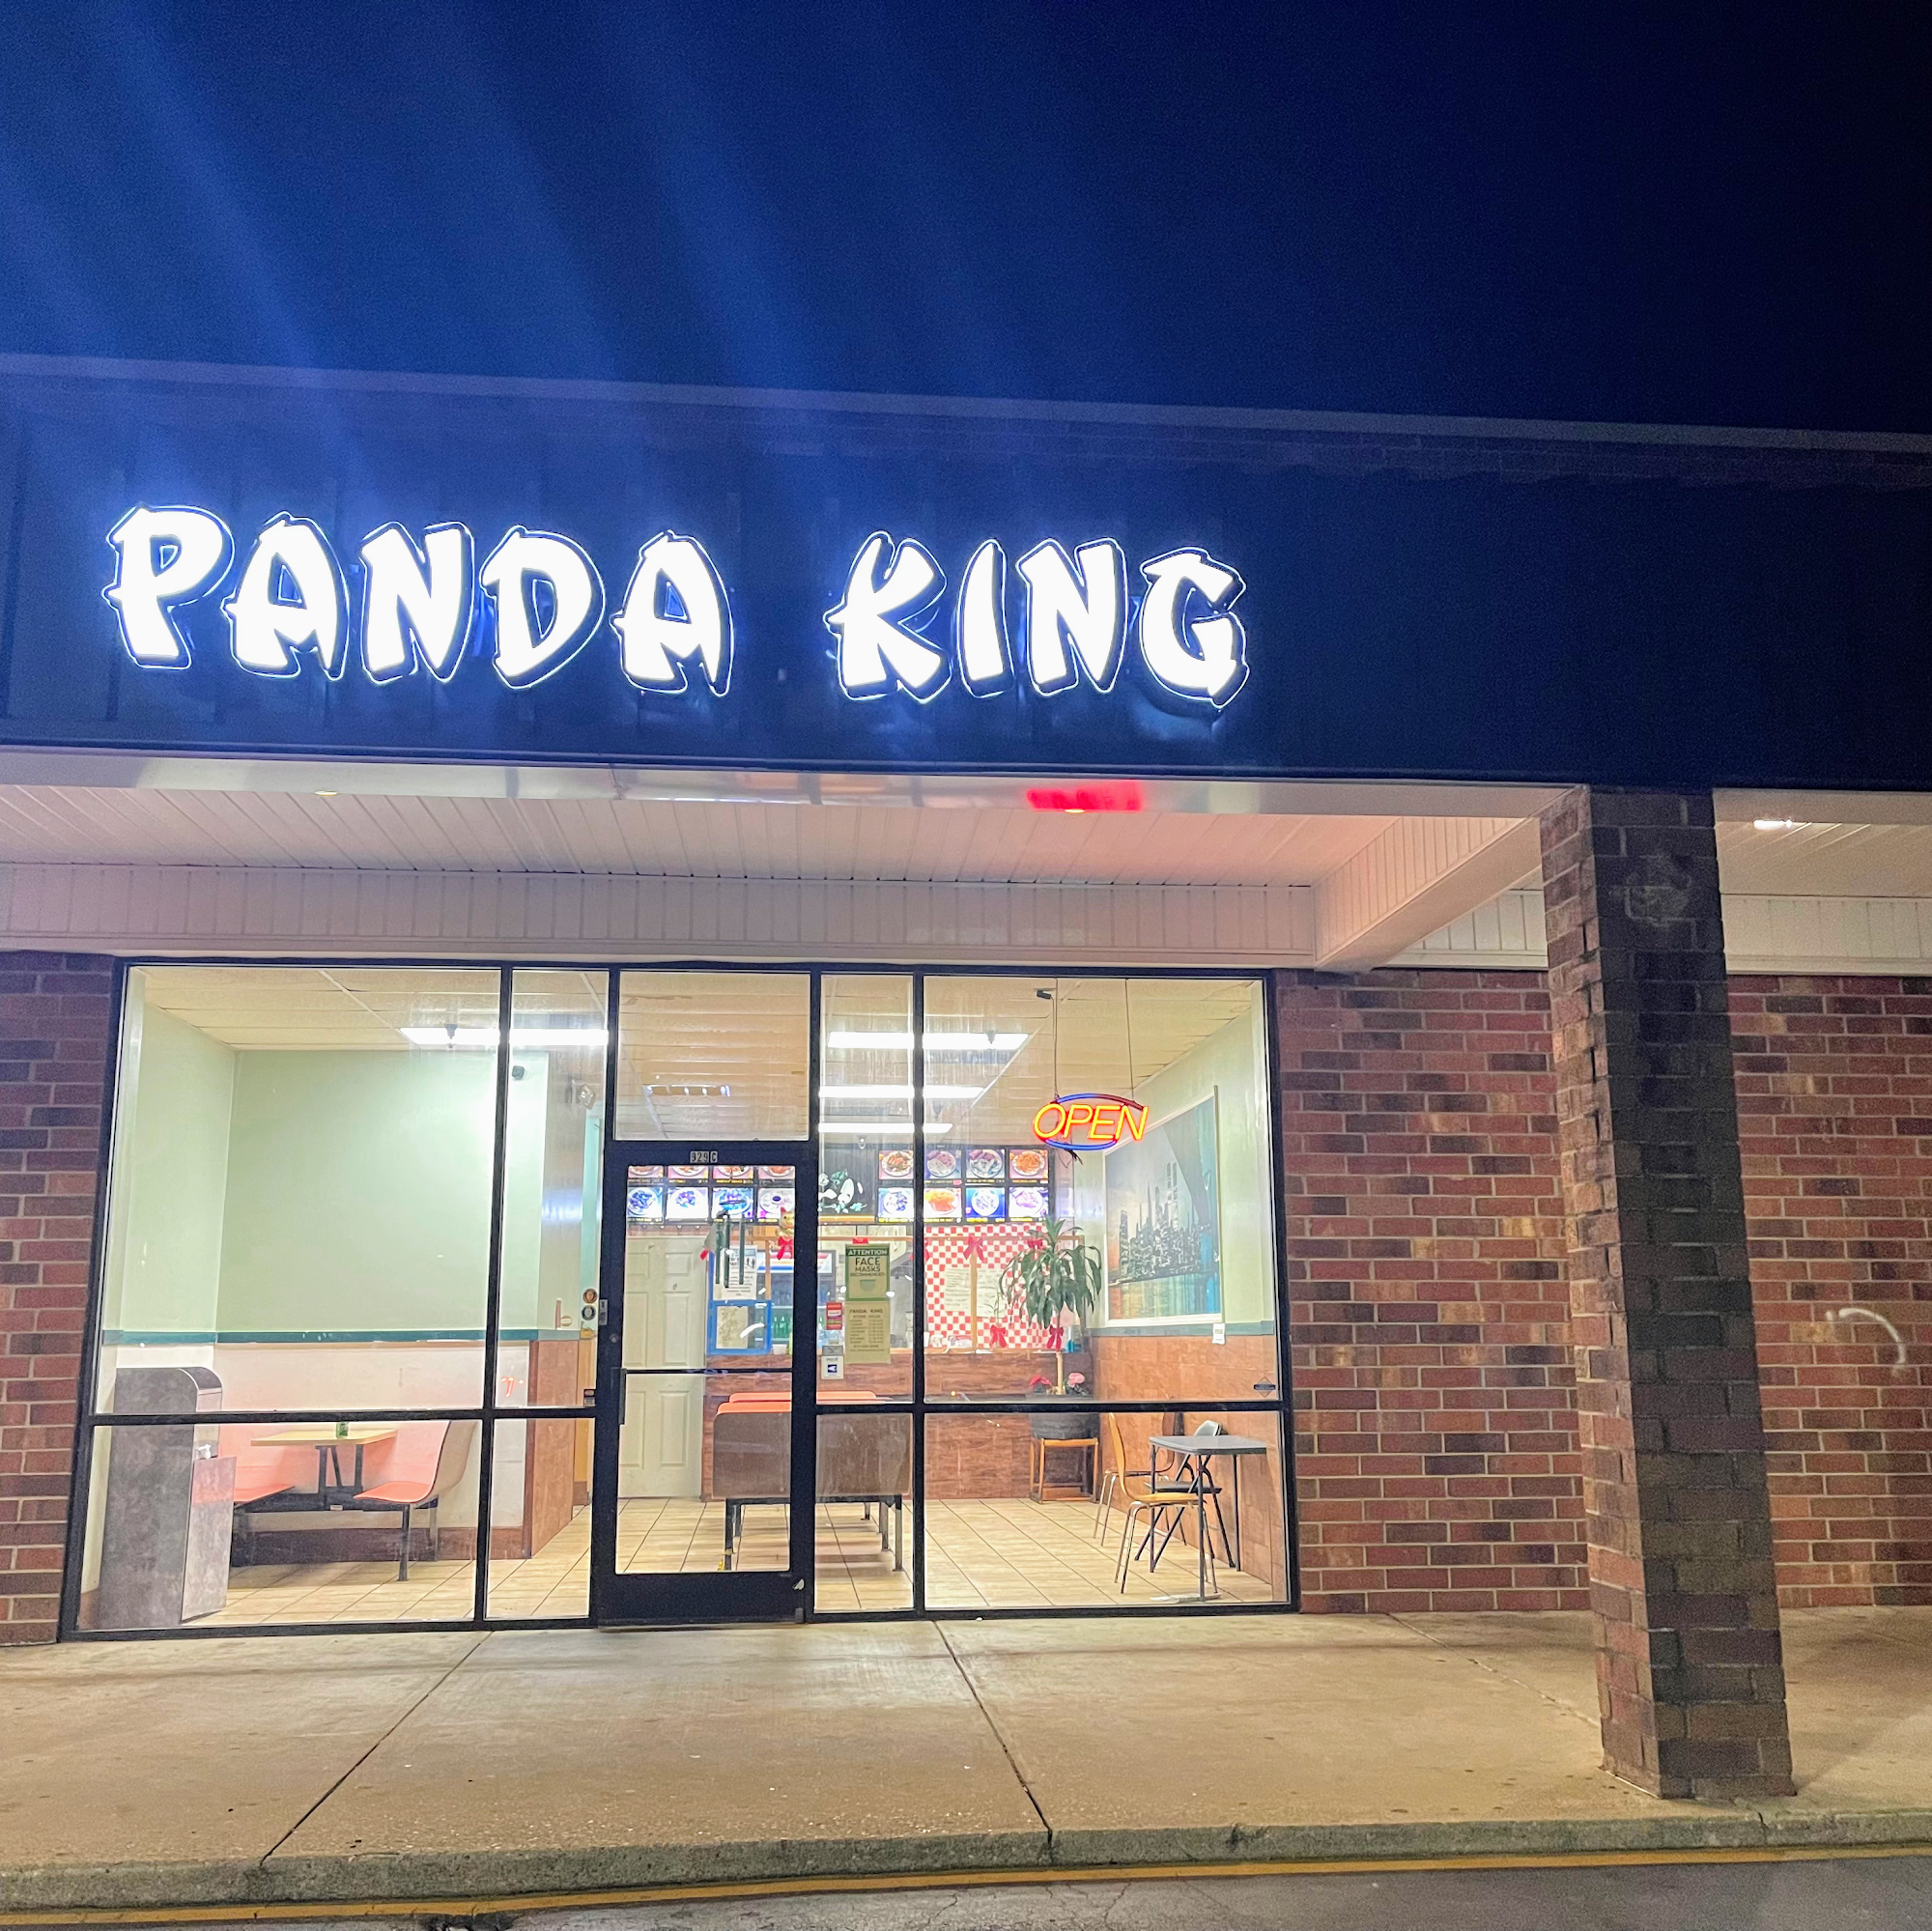 Panda King Chinese Restaurant